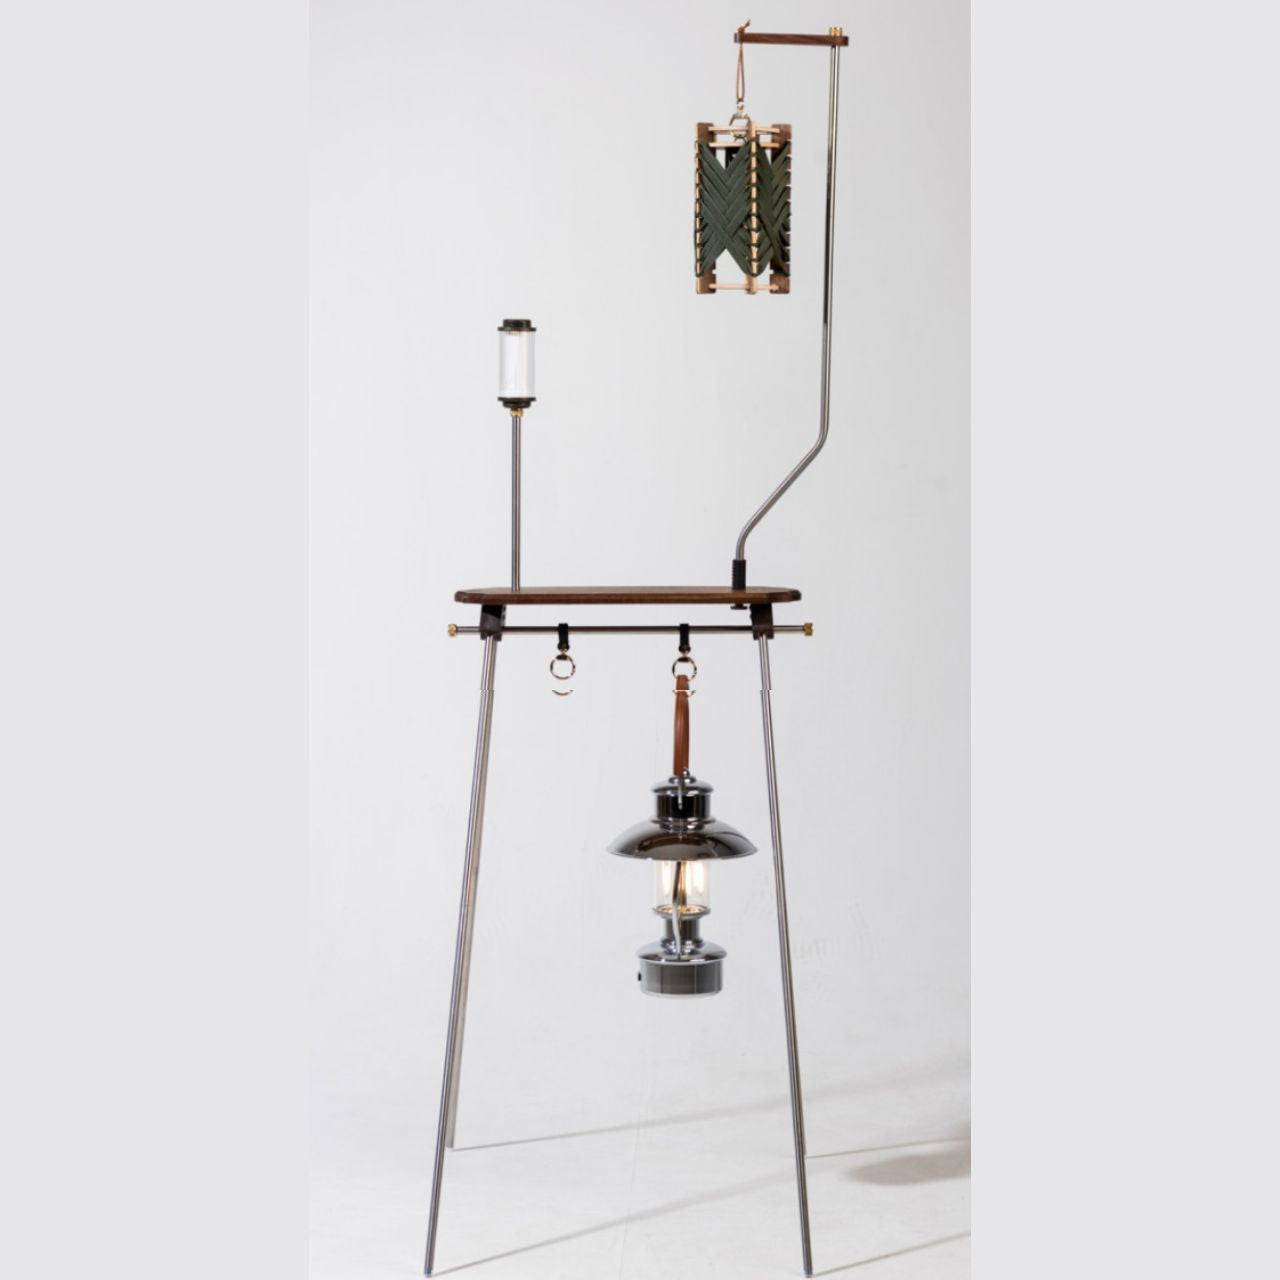 Premium Handcarft Wood lantern hanger stand/ Table/ Shelf, Made in Korea